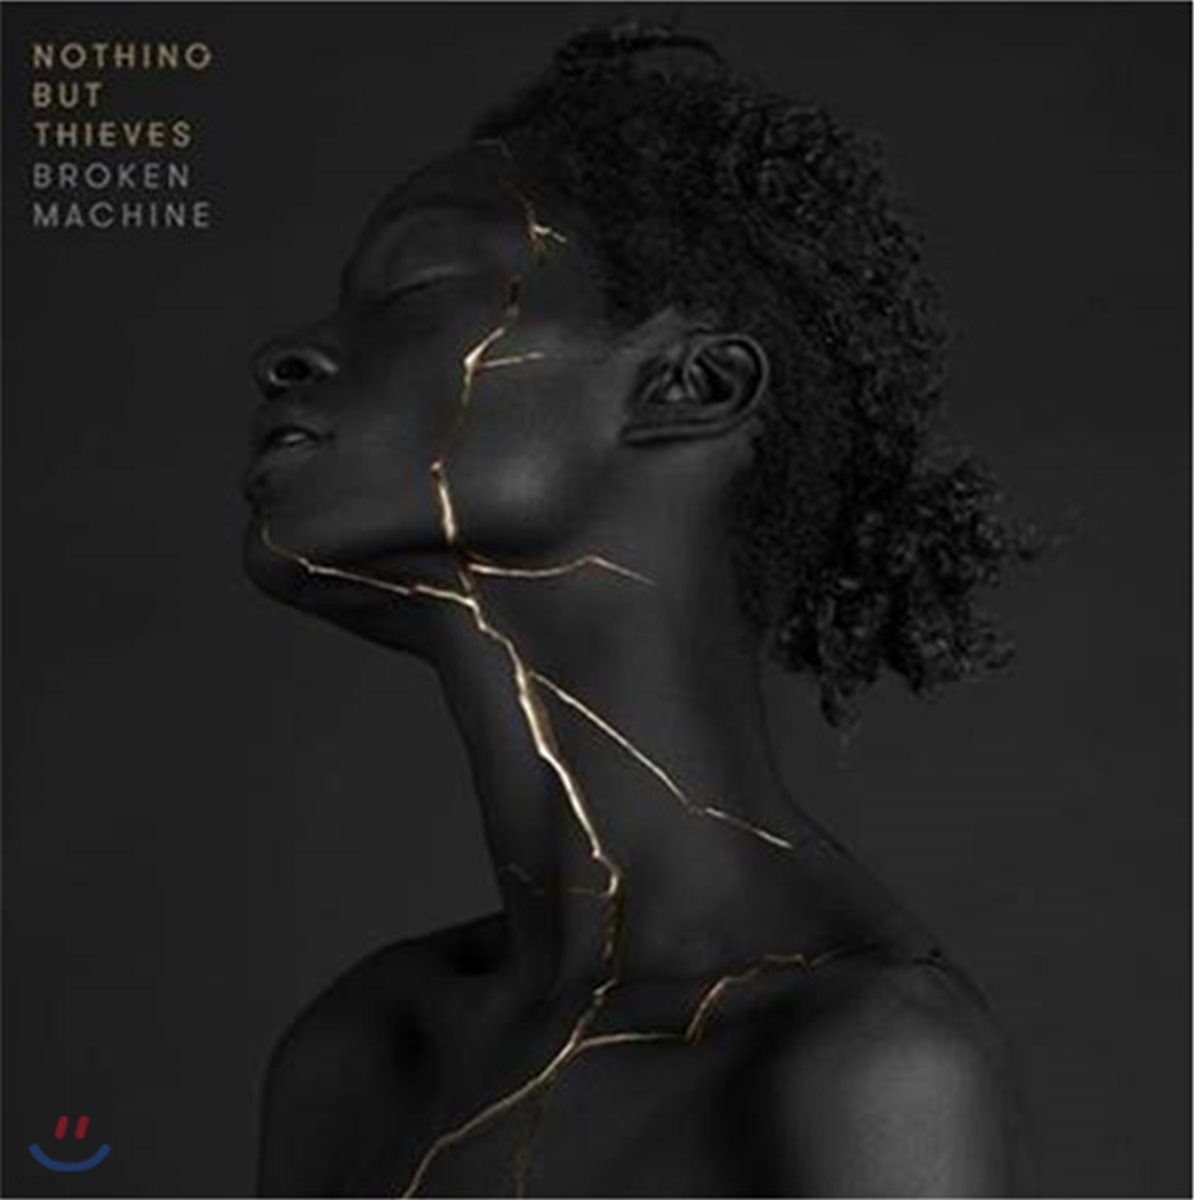 Nothing But Thieves - Broken Machine 나씽 벗 띠브스 정규 2집 [한국 특별 한정반]